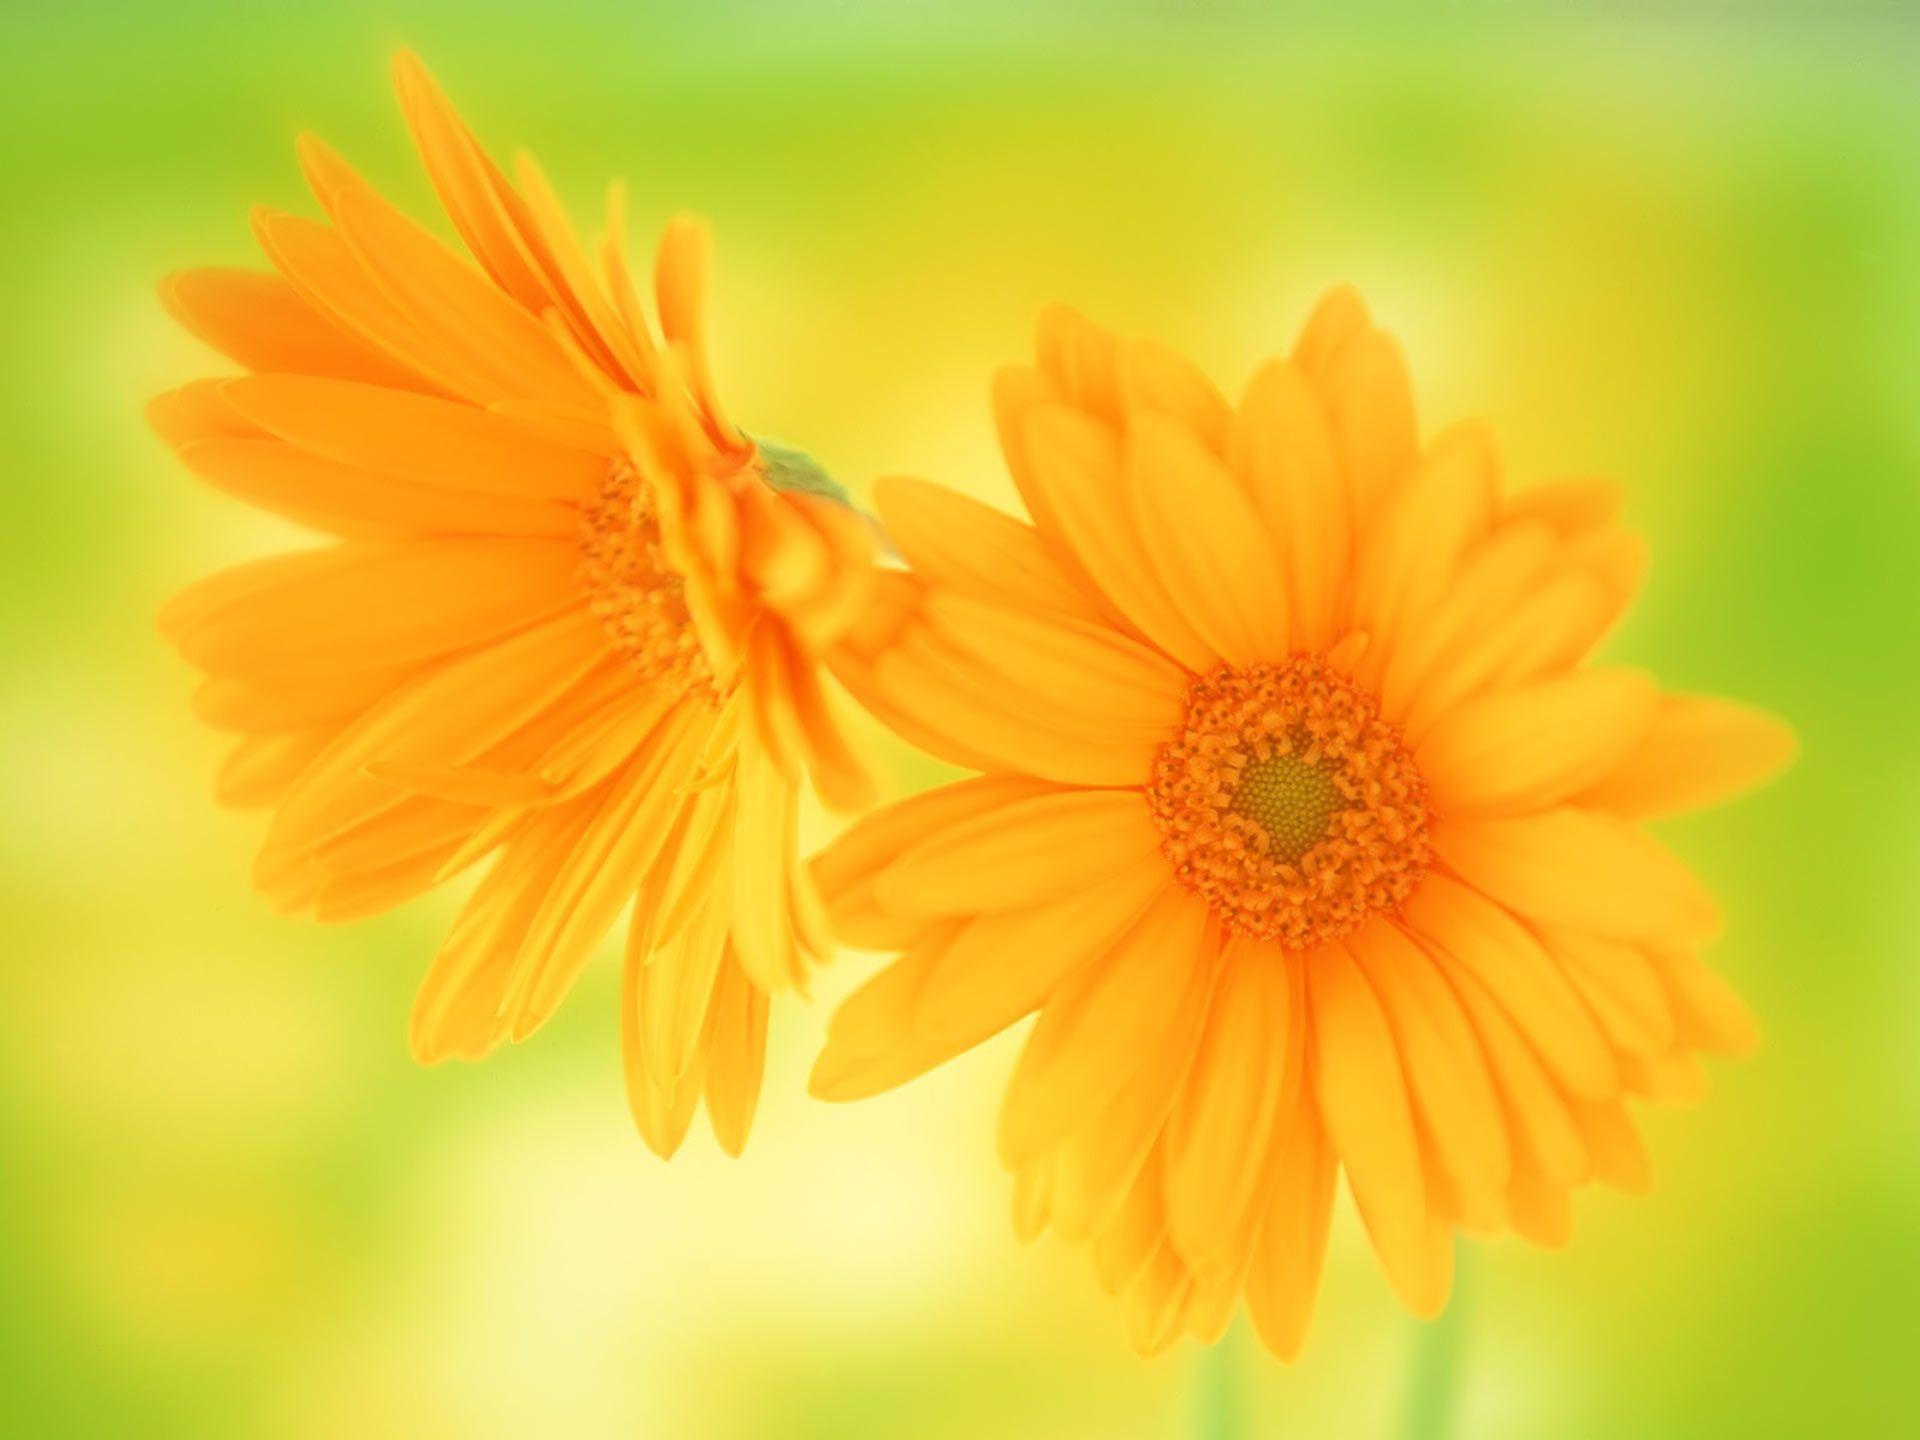 Desktop Wallpaper · Gallery · Windows 7 · Yellow flowers picture